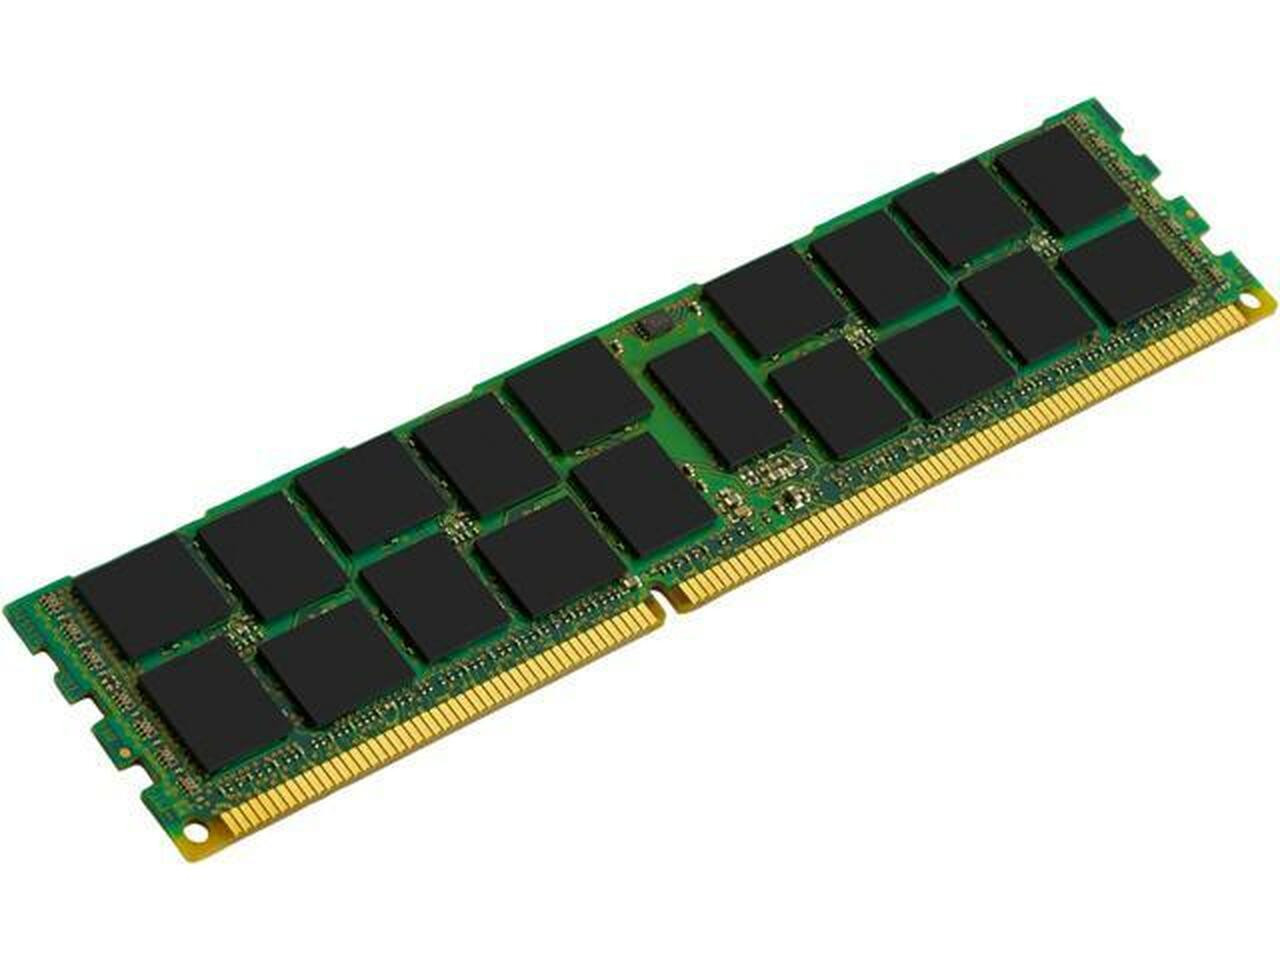 Netpatibles 32GB DDR3 SDRAM Memory Module - MEMDR332LSL04LR16NPM